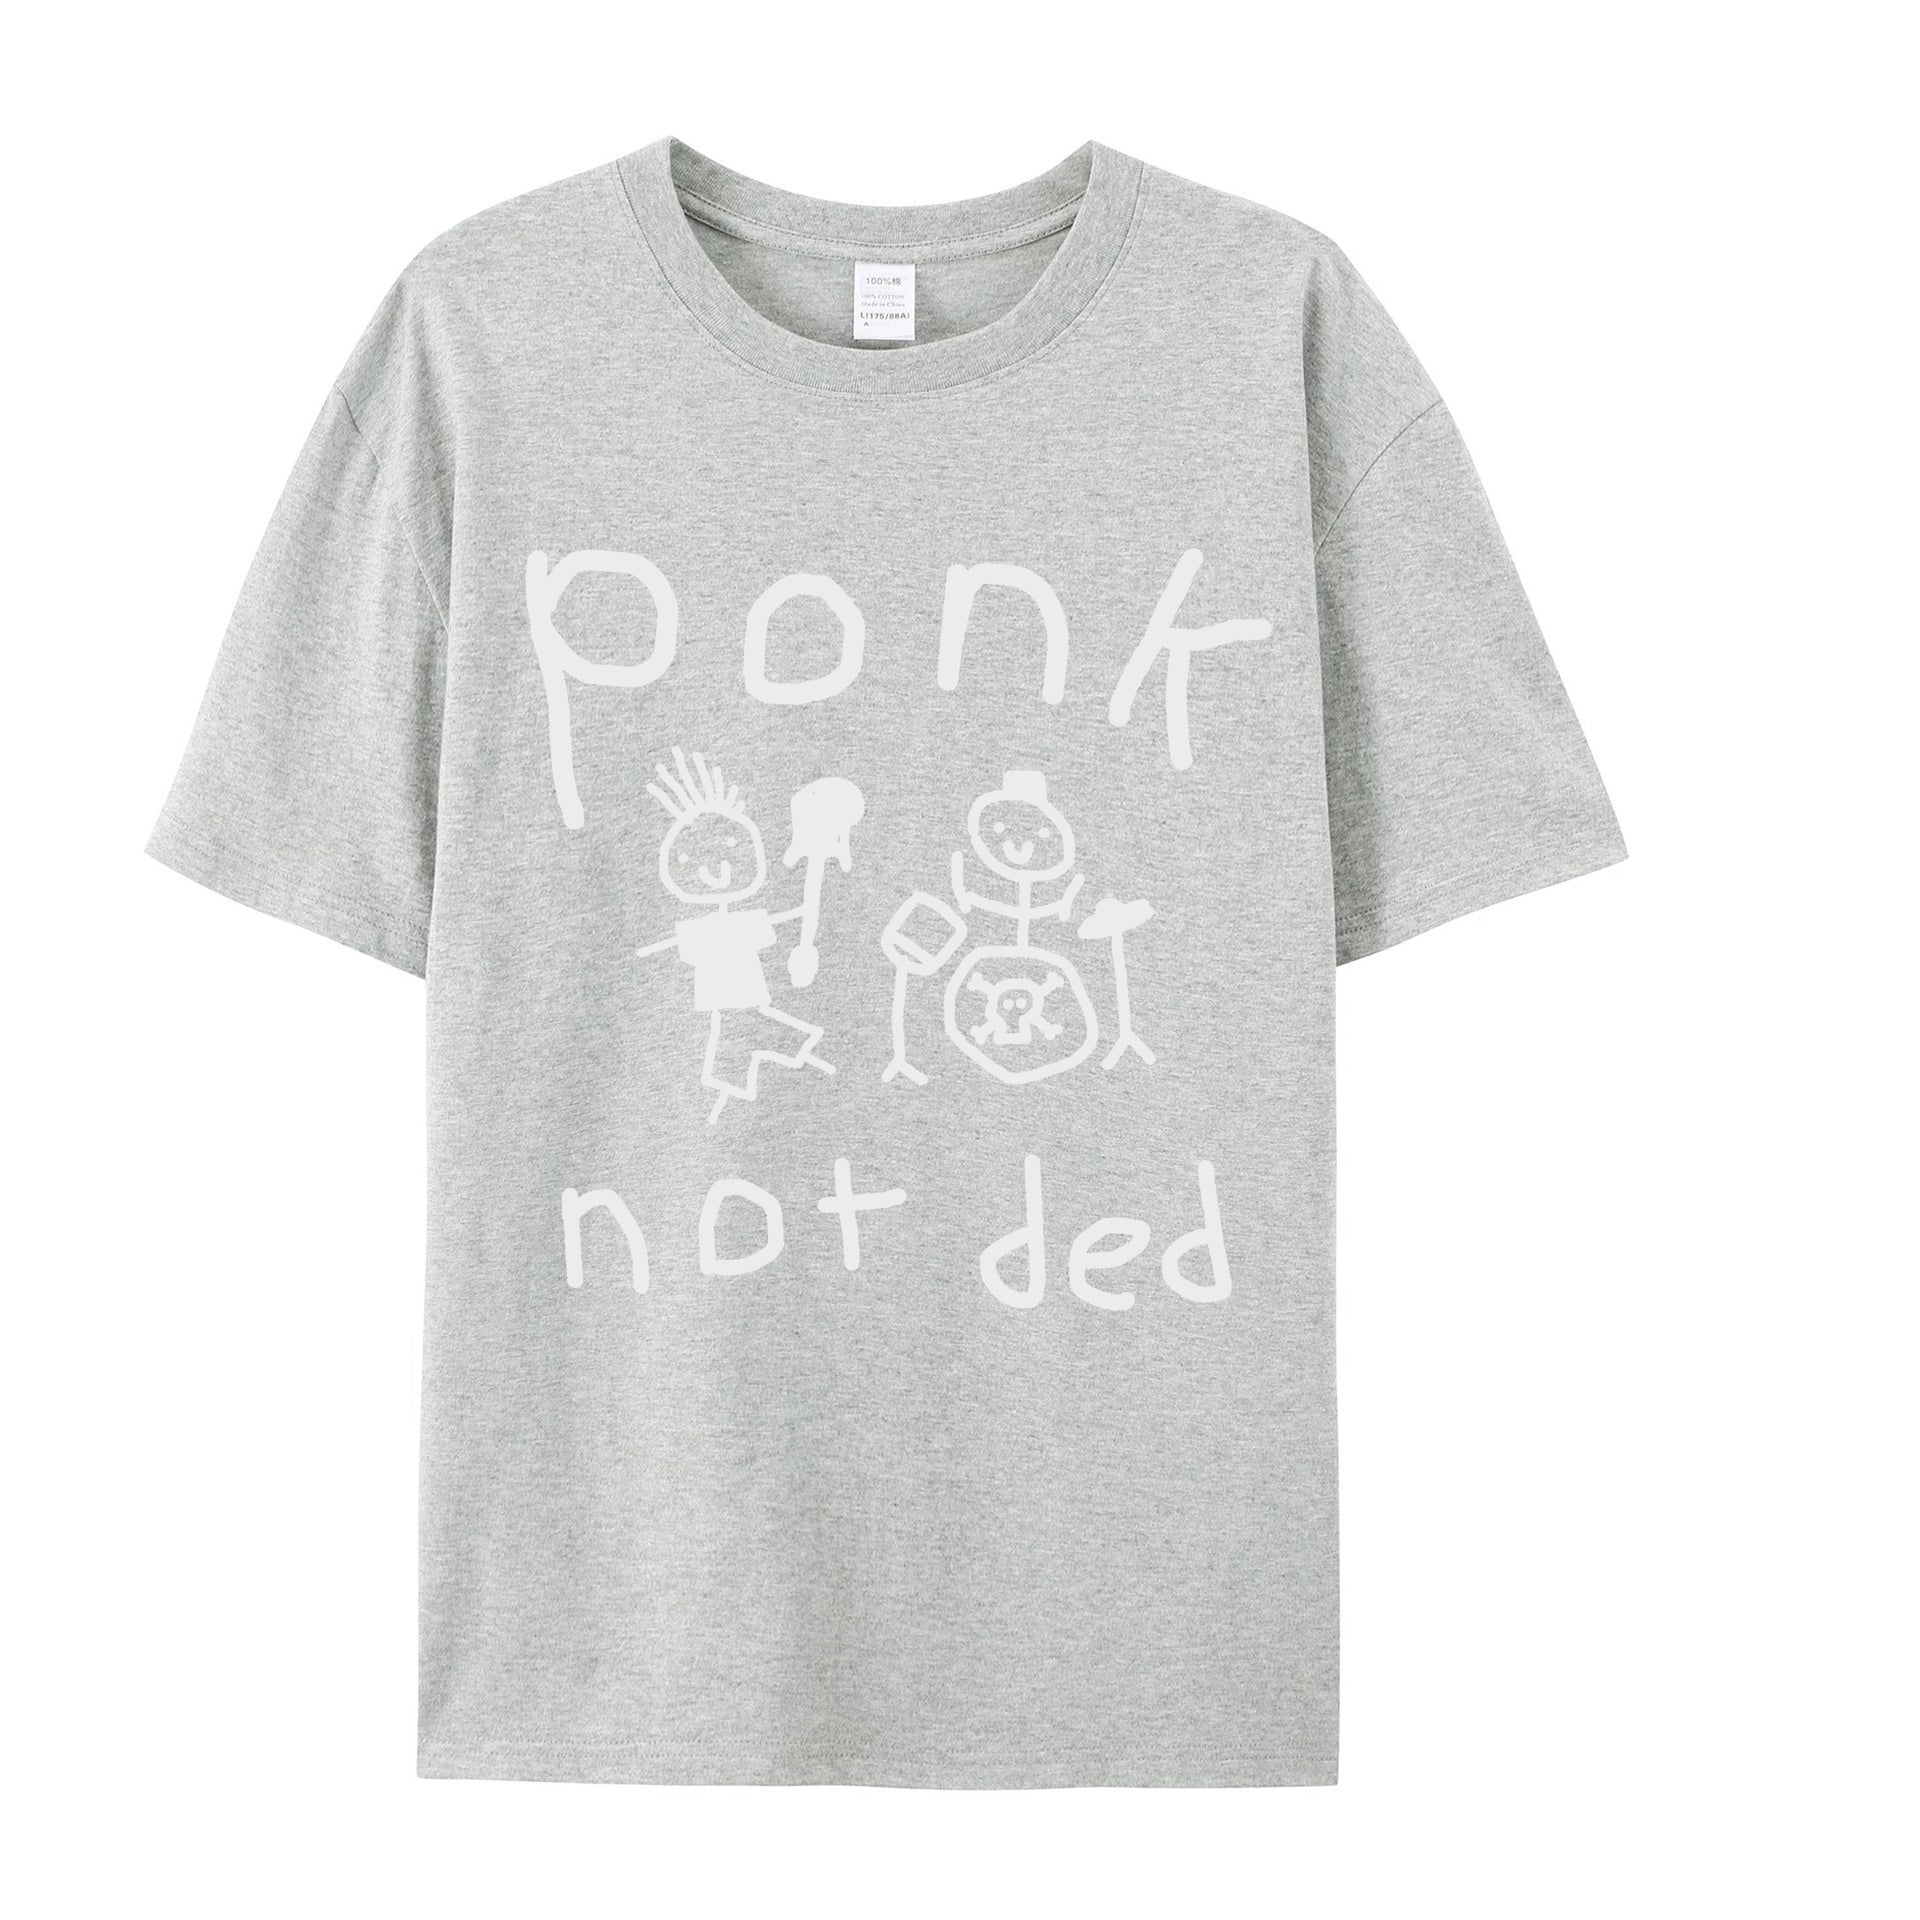 Ponk not ded Shirt - Shapelys